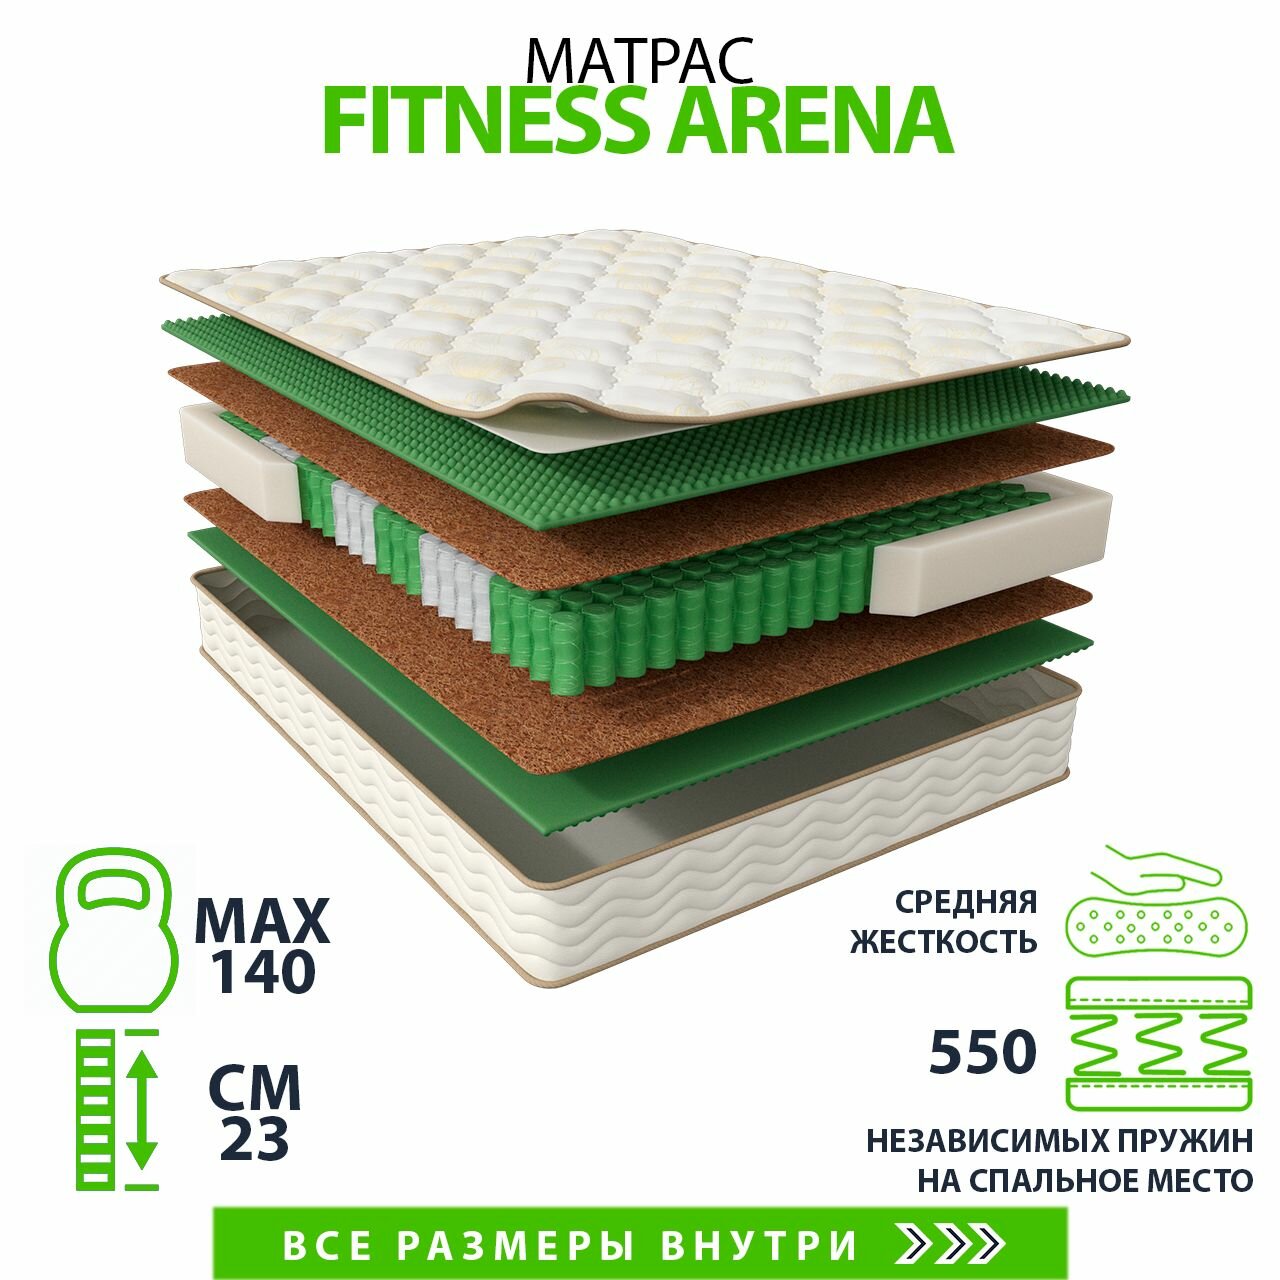 Матрас Fitness Arena 120х200, двусторонний с одинаковой жесткостью, кокосовое волокно